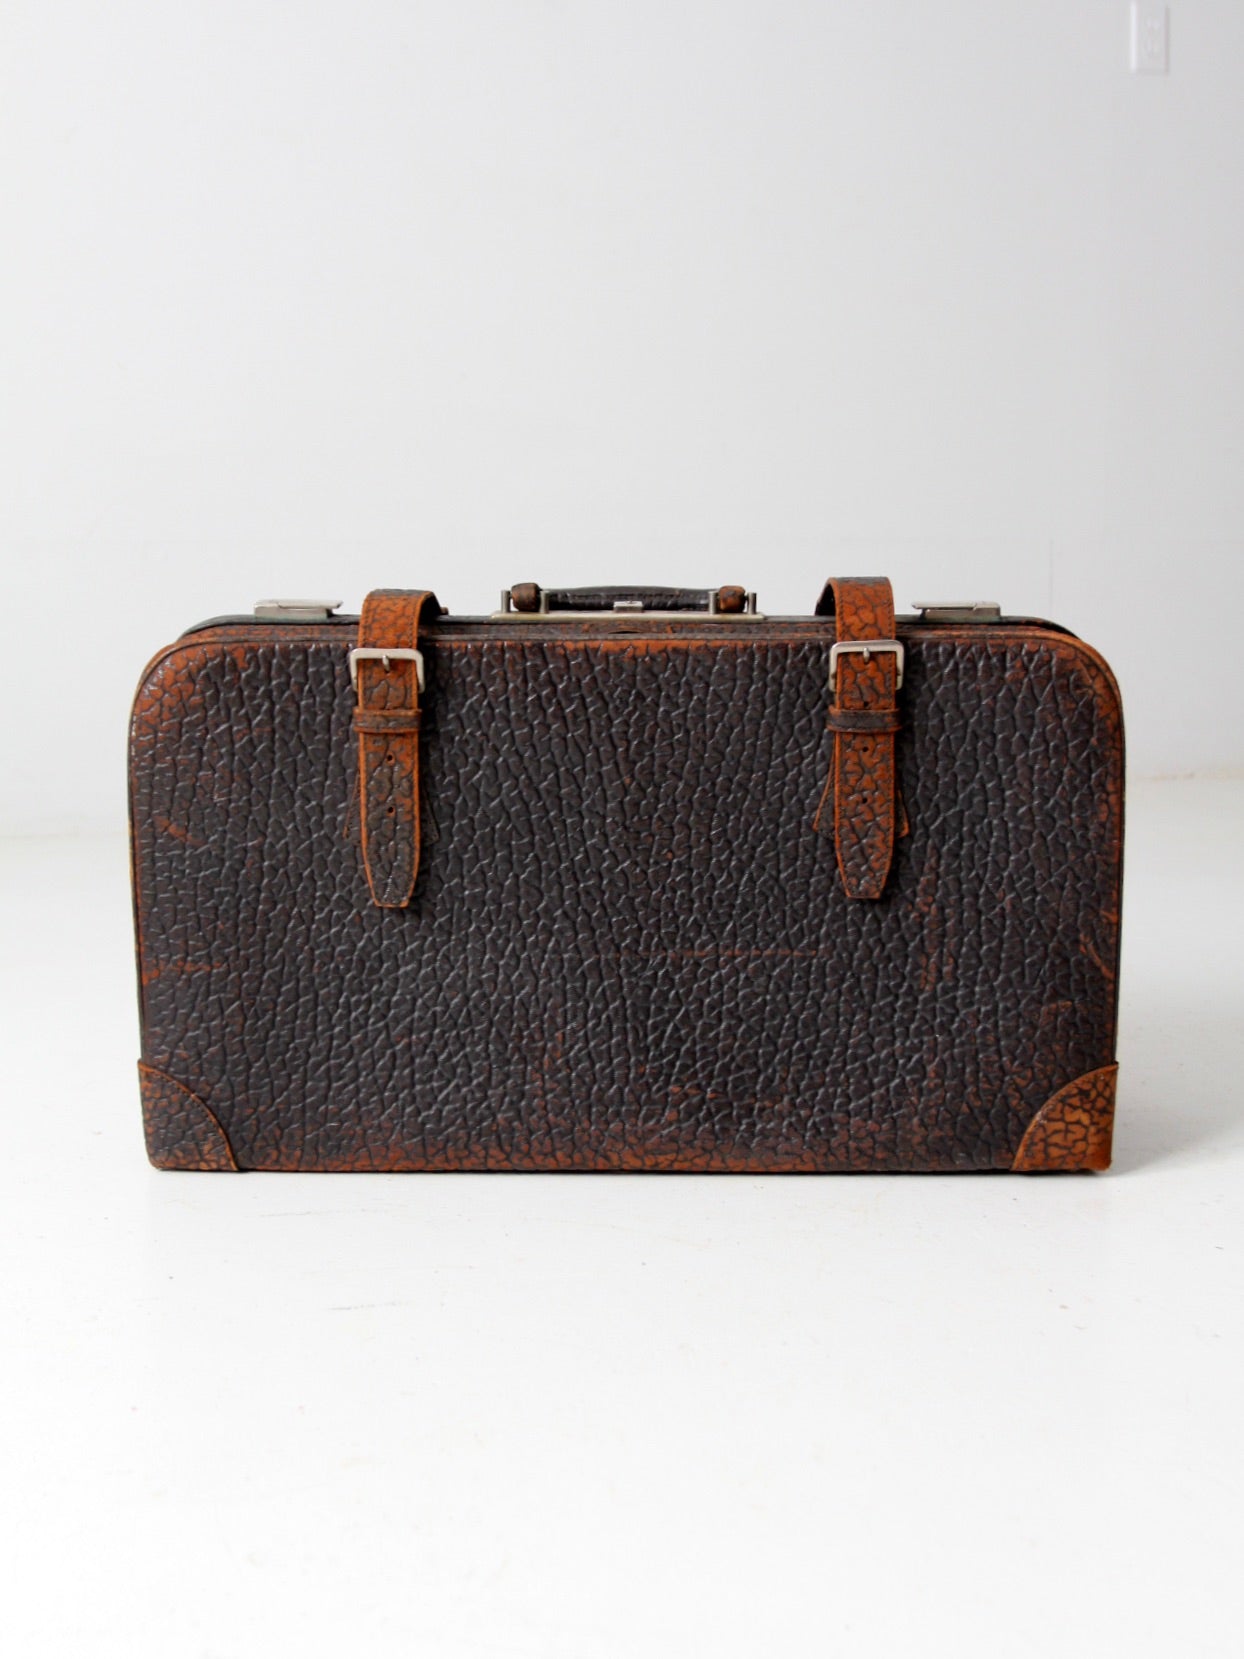 vintage 30s black leather suitcase